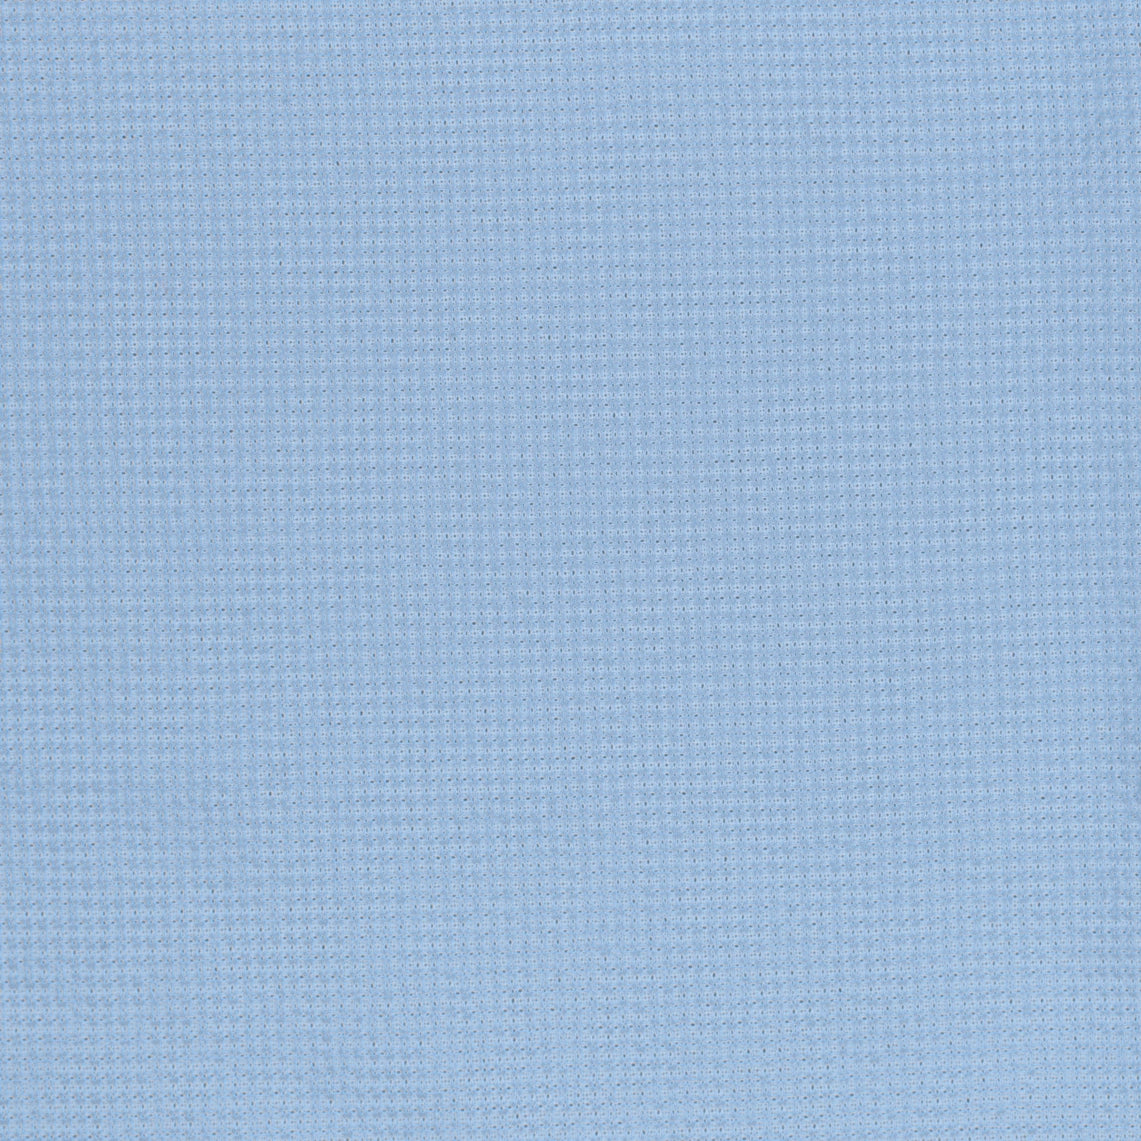 36002-02 Light Blue Polyester Crepe Plain Dyed 100% 210g/yd 54" blue plain dyed polyester woven Solid Color - knit fabric - woven fabric - fabric company - fabric wholesale - fabric b2b - fabric factory - high quality fabric - hong kong fabric - fabric hk - acetate fabric - cotton fabric - linen fabric - metallic fabric - nylon fabric - polyester fabric - spandex fabric - chun wing hing - cwh hk - fabric worldwide ship - 針織布 - 梳織布 - 布料公司- 布料批發 - 香港布料 - 秦榮興